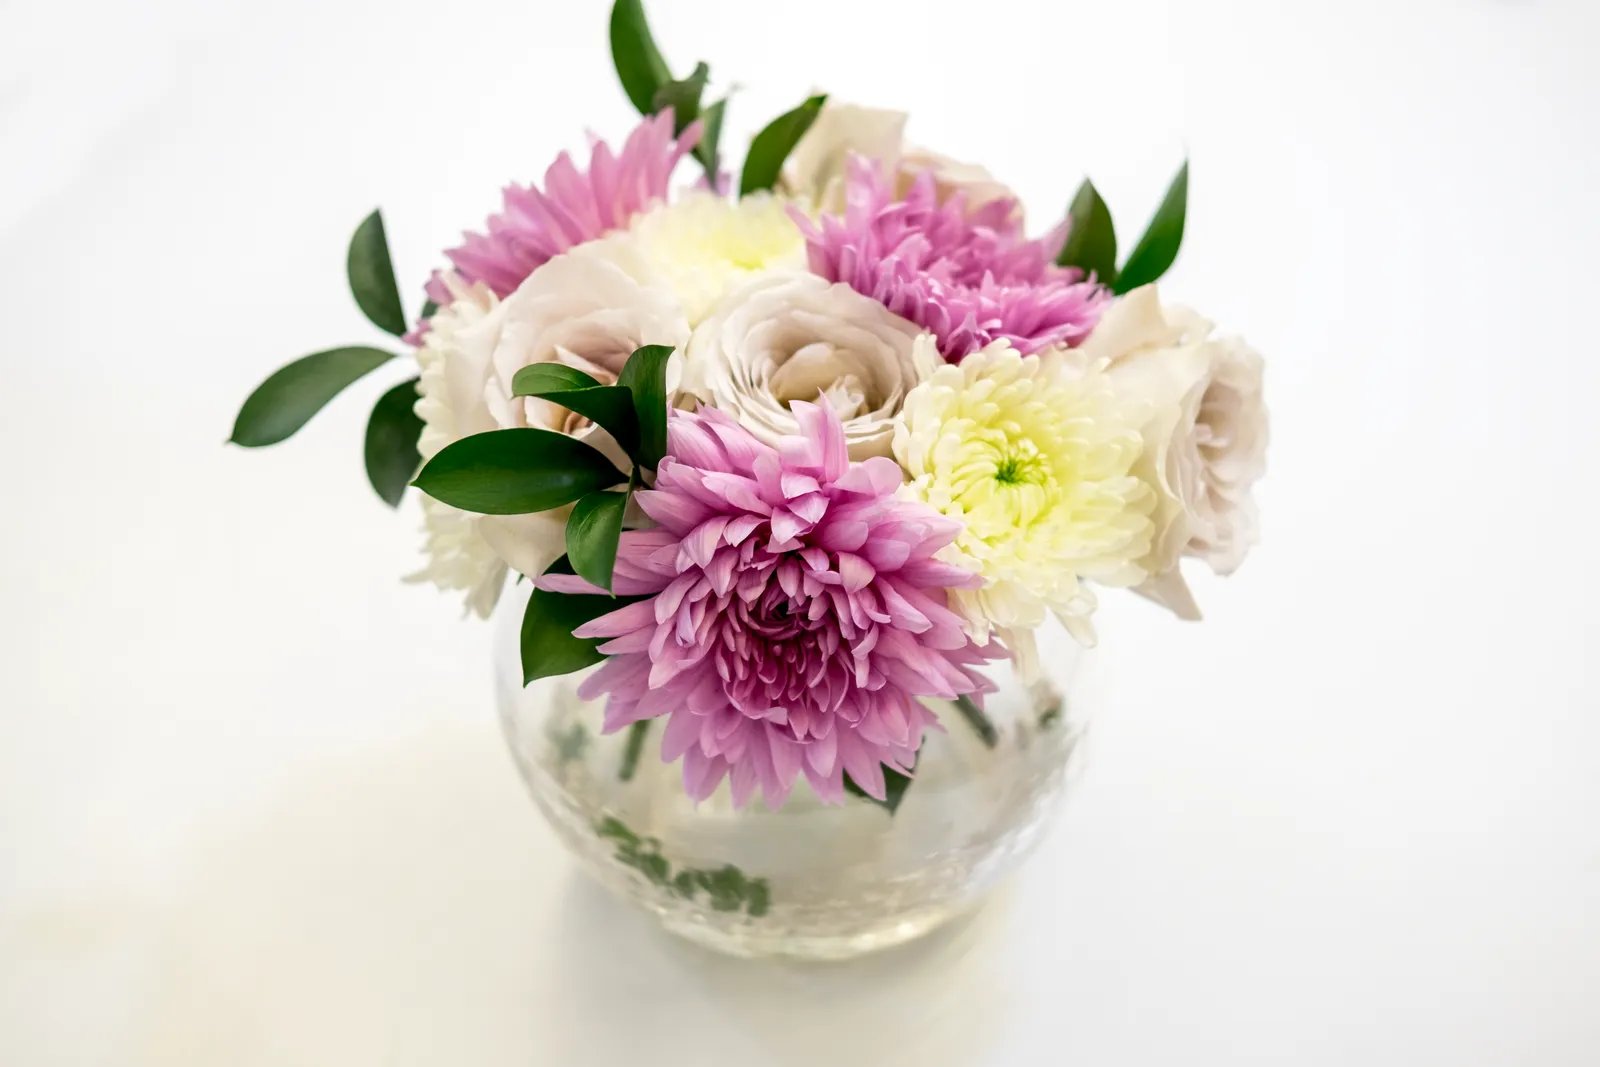 How To Make Flower Arrangements In A Vase